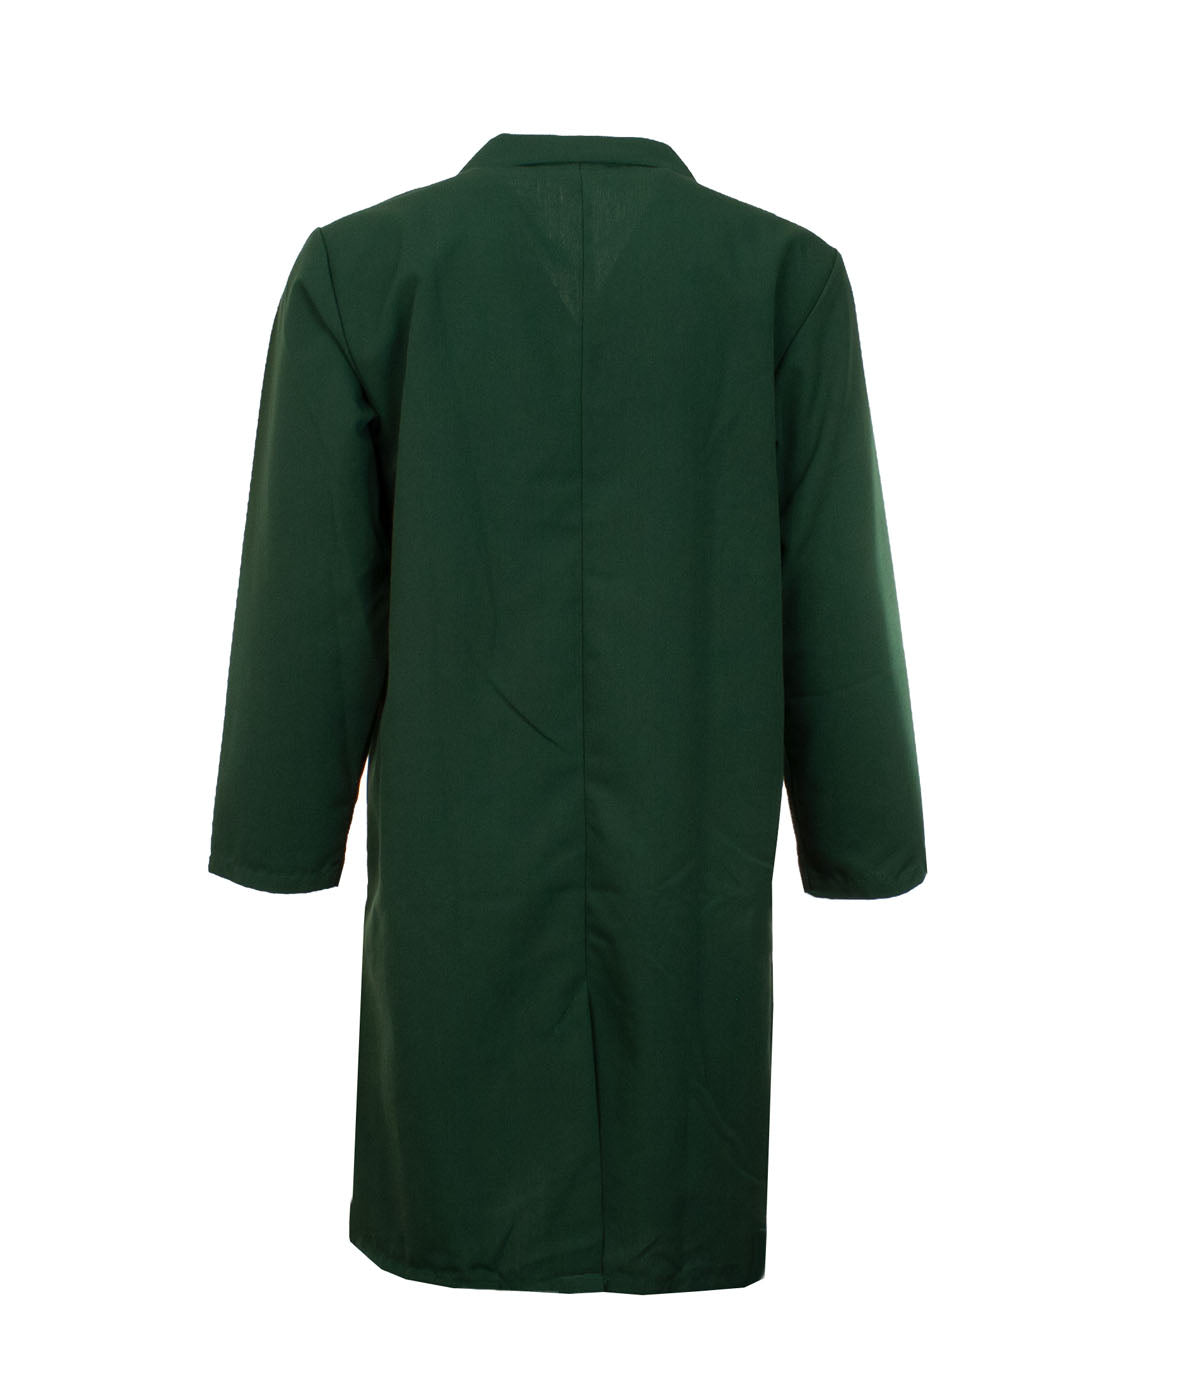 Sarrau sans poches Premium Uniforms #6280 dos vert